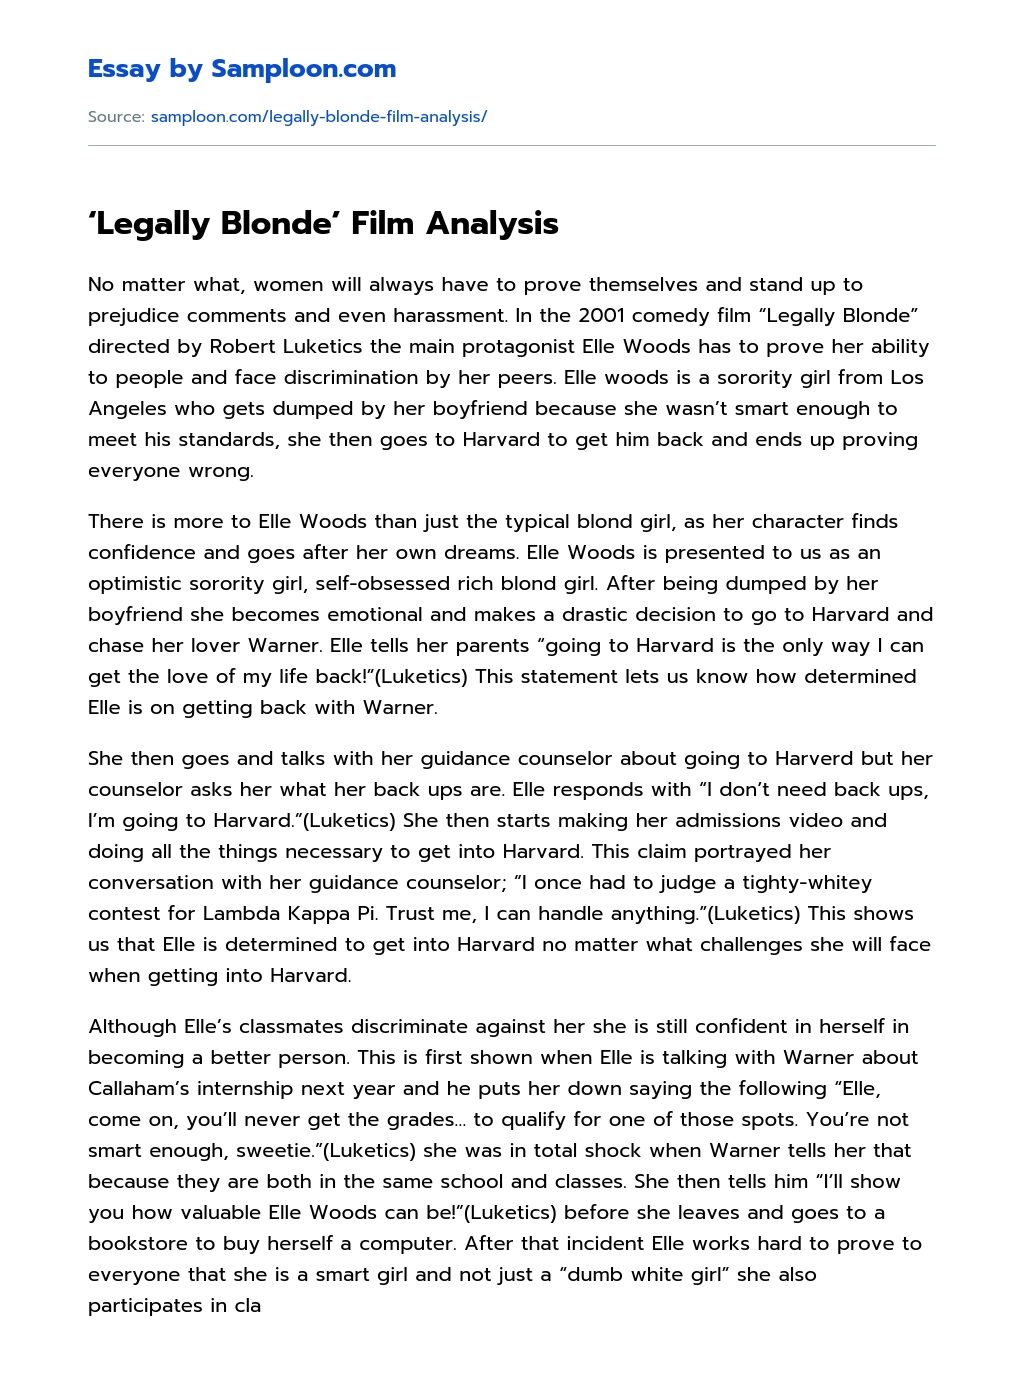 ‘Legally Blonde’ Film Analysis essay